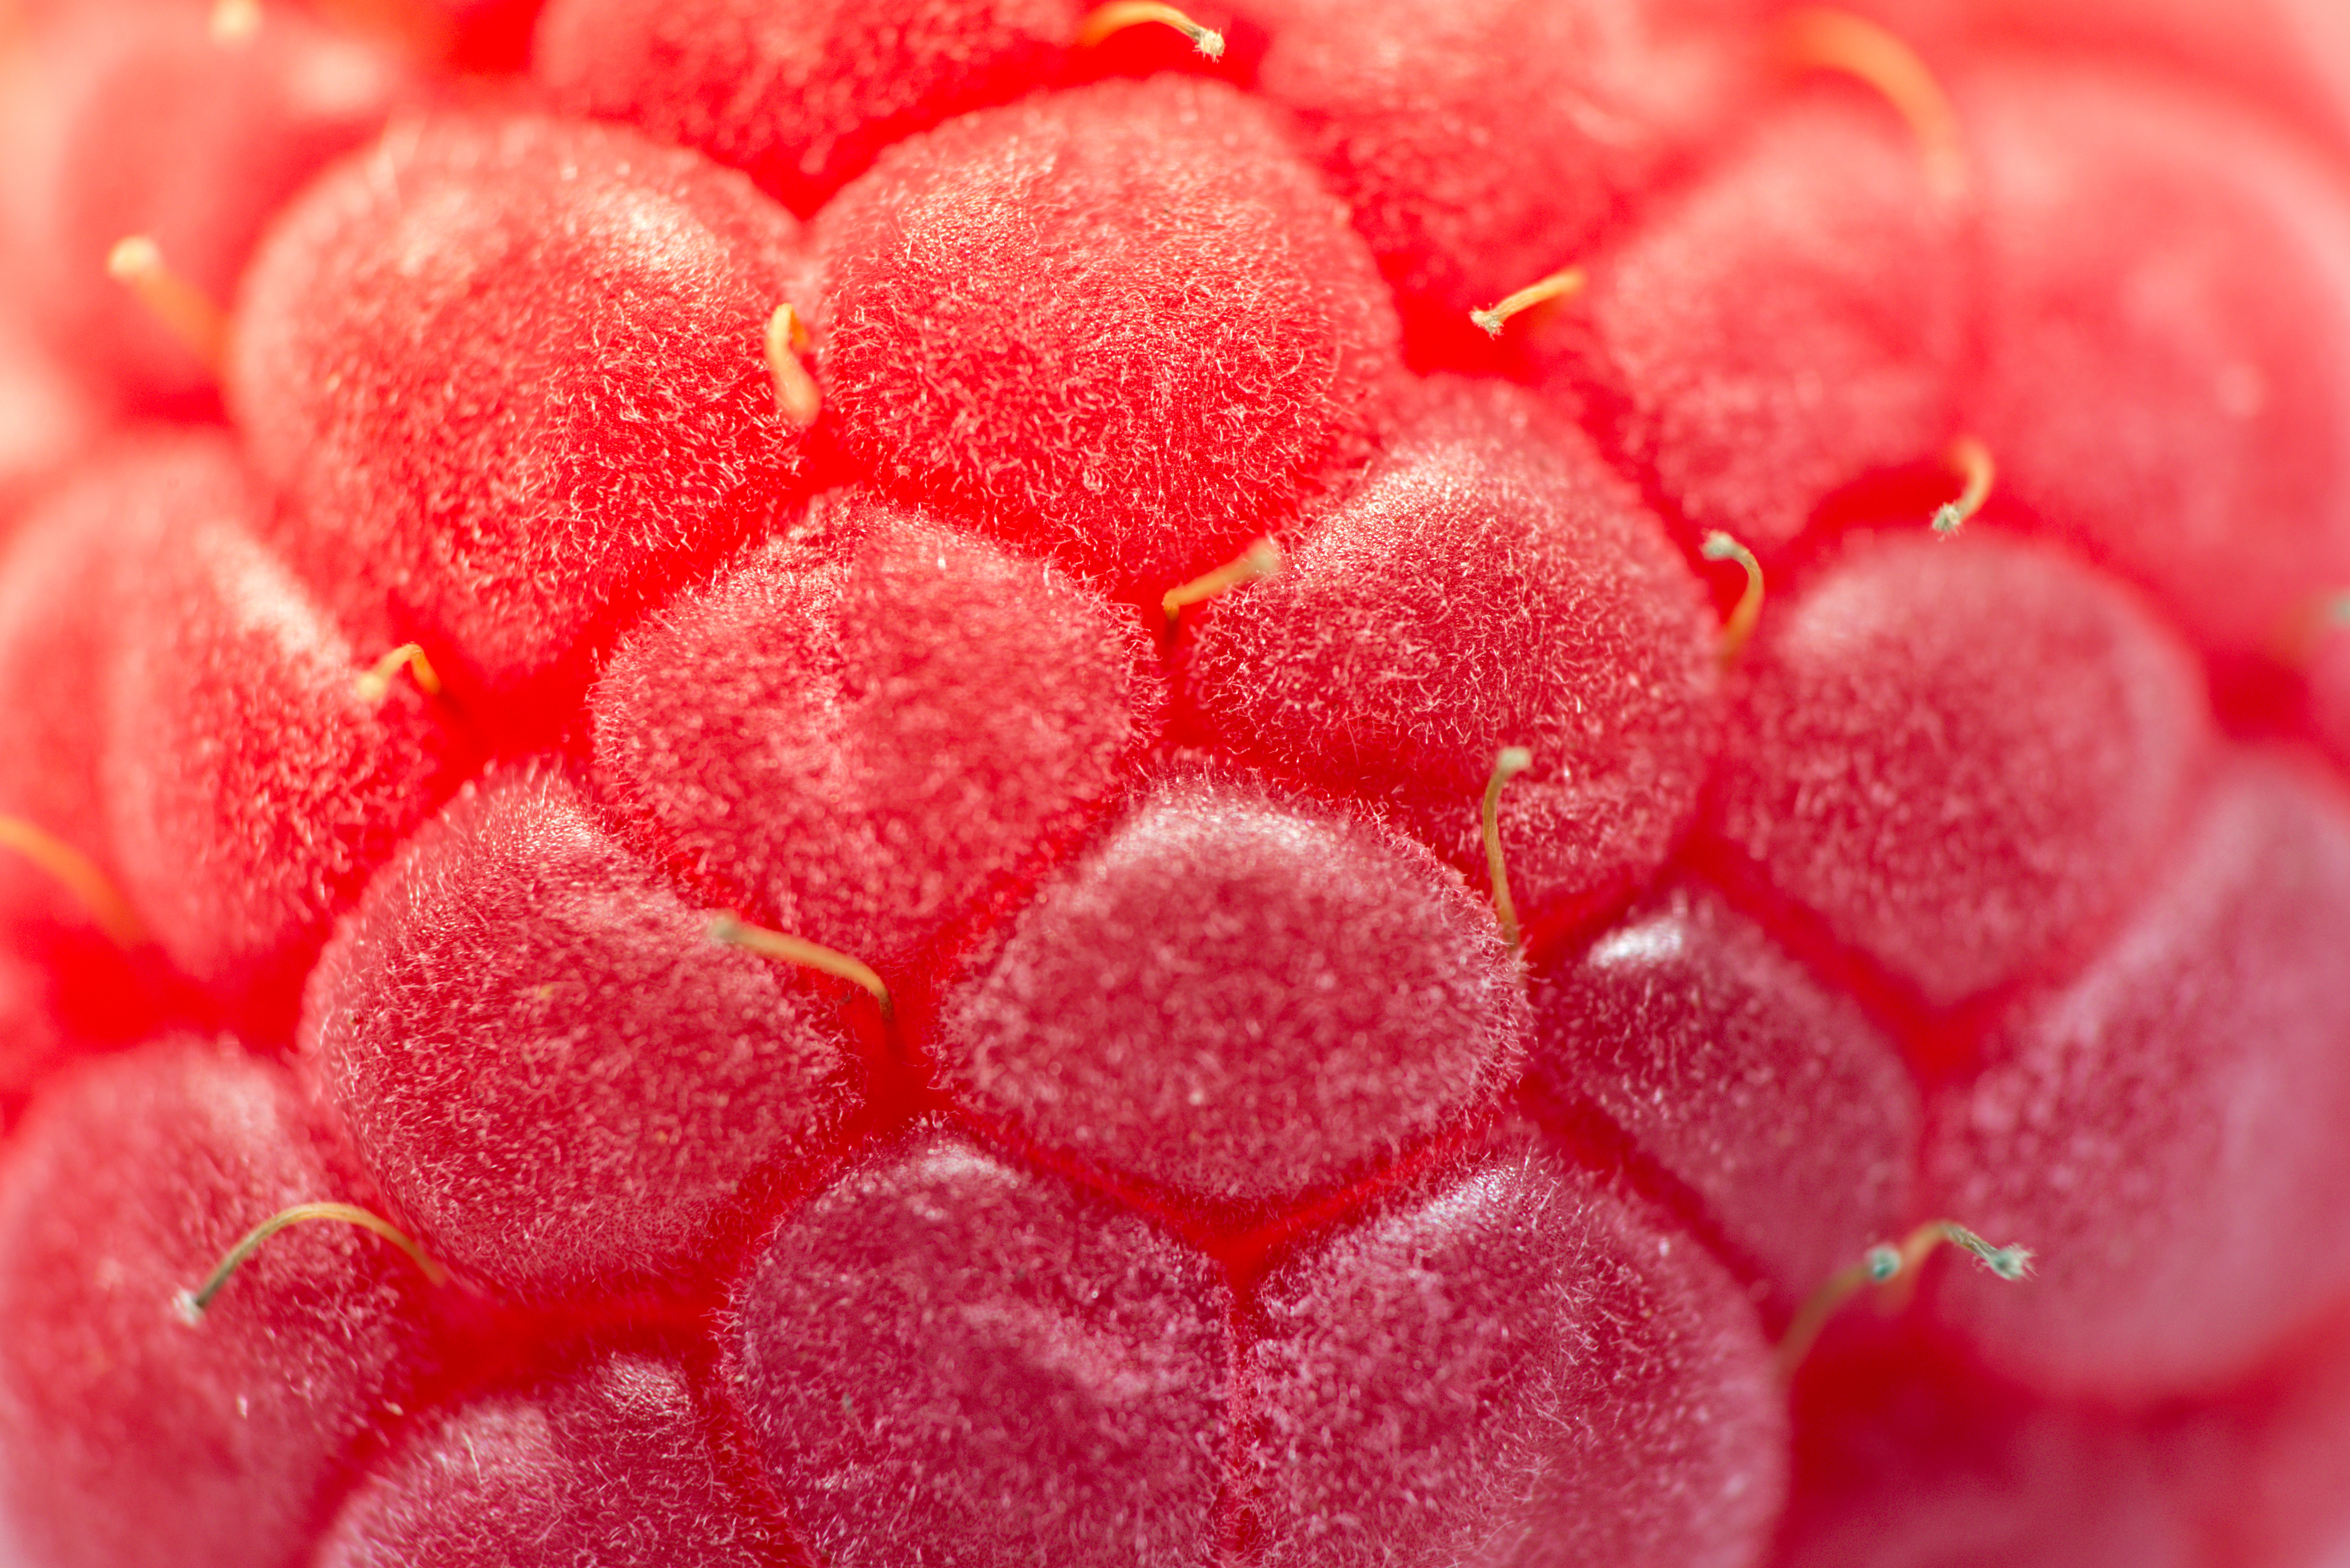 Raspberry close-up | slon.pics - free stock photos and illustrations